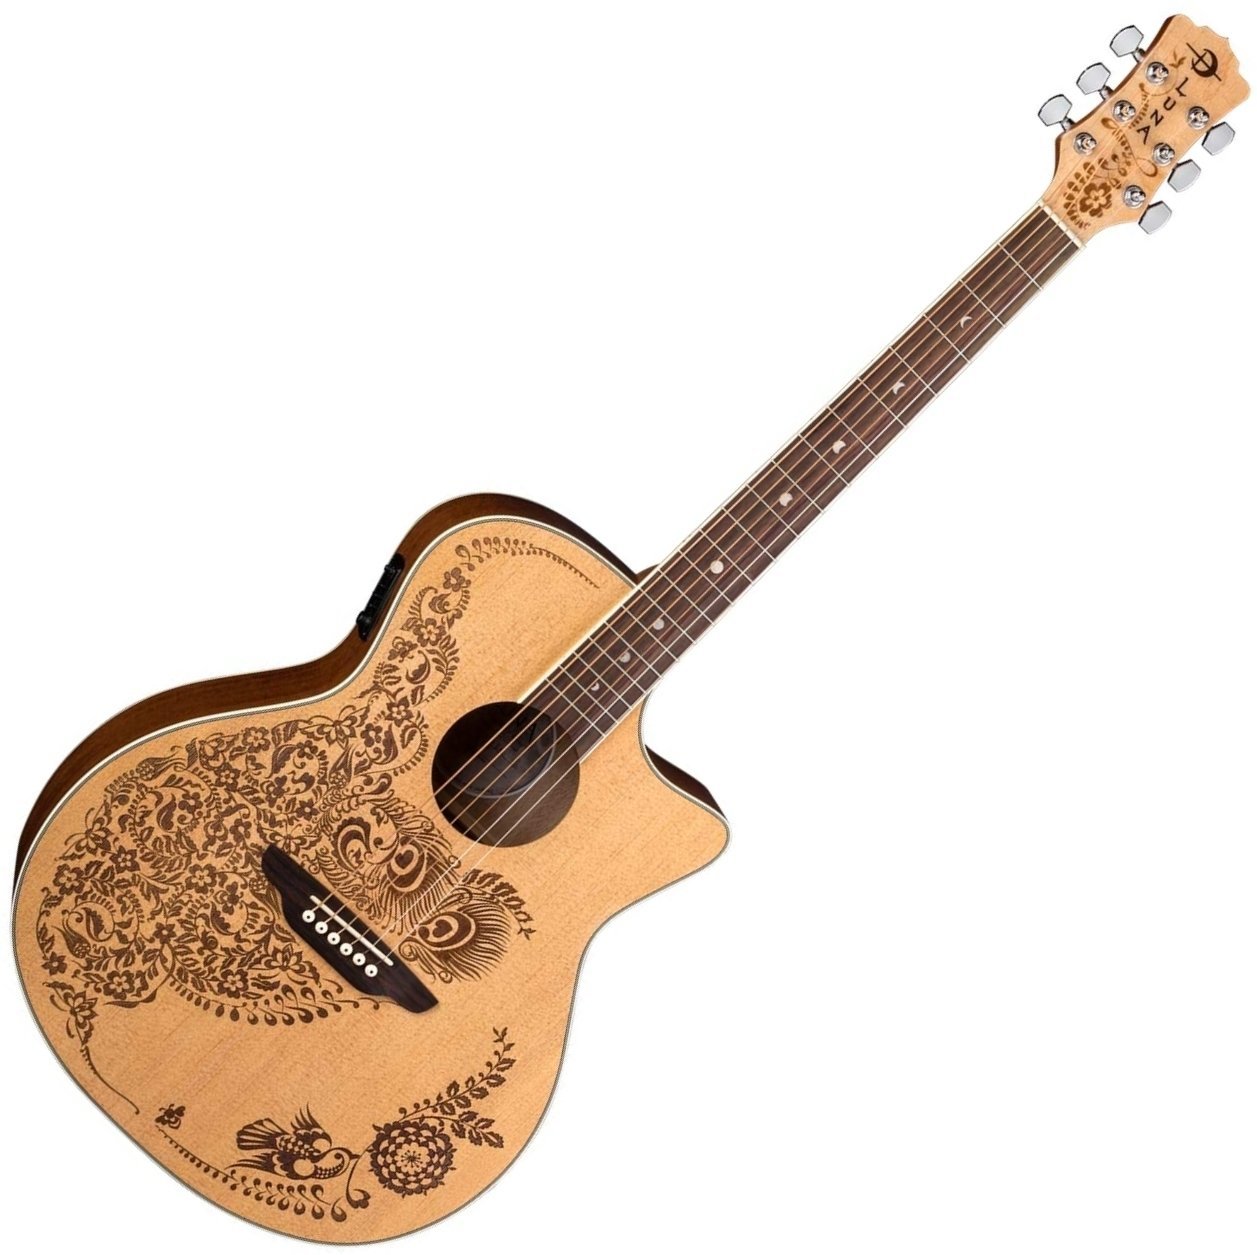 Jumbo elektro-akoestische gitaar Luna Henna Oasis A/E Laser Henna "Oasis" Design